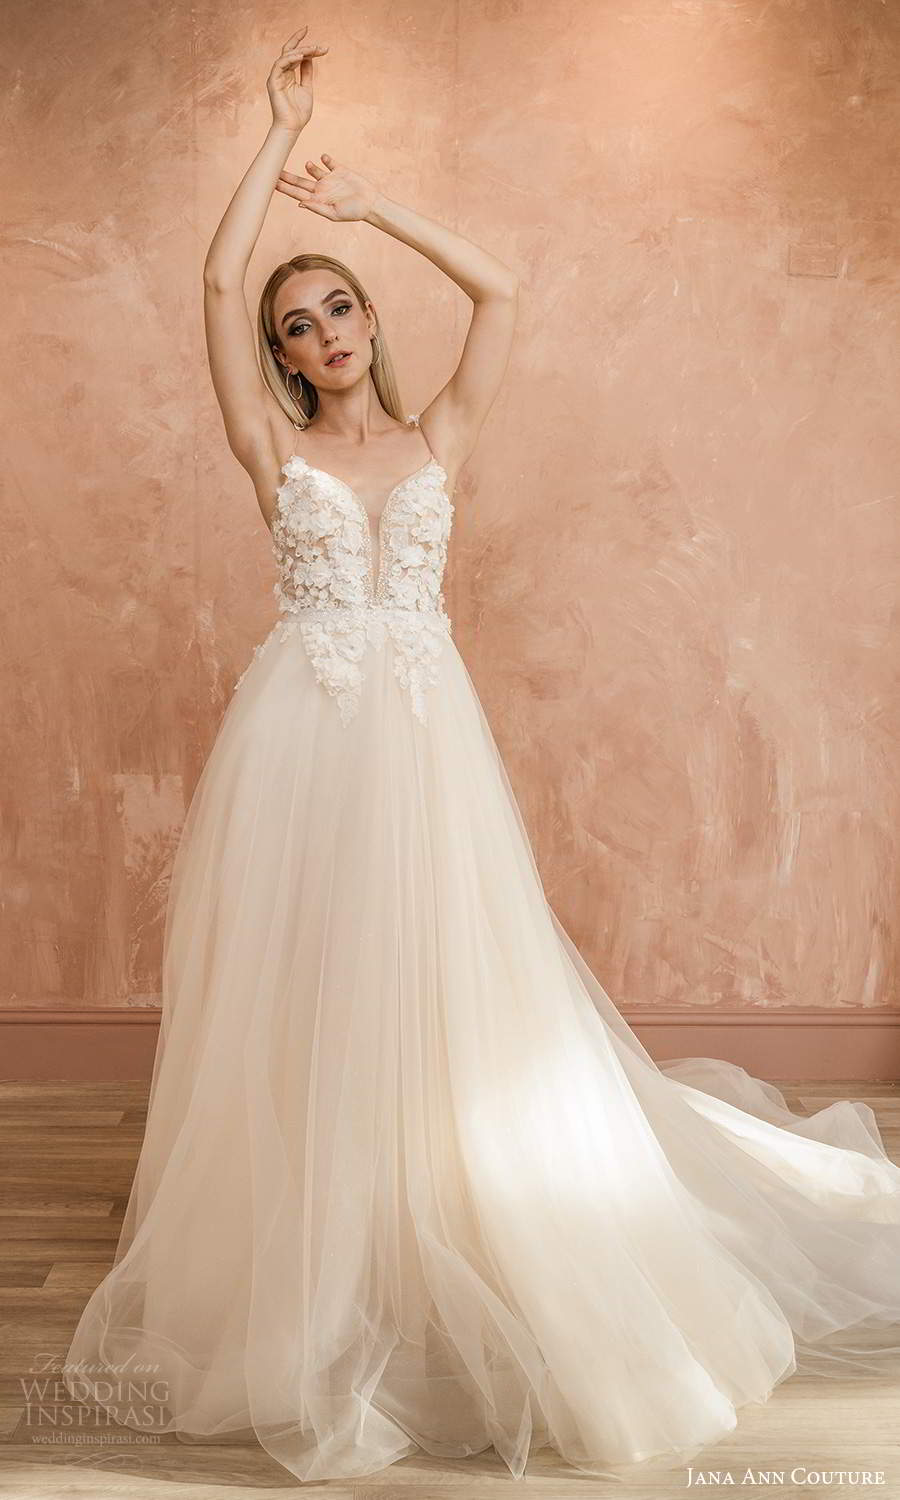 jana ann couture 2021 bridal sleeveless straps sweetheart neckline heavily embellished bodice a line ball gown wedding dress chapel train (16) mv